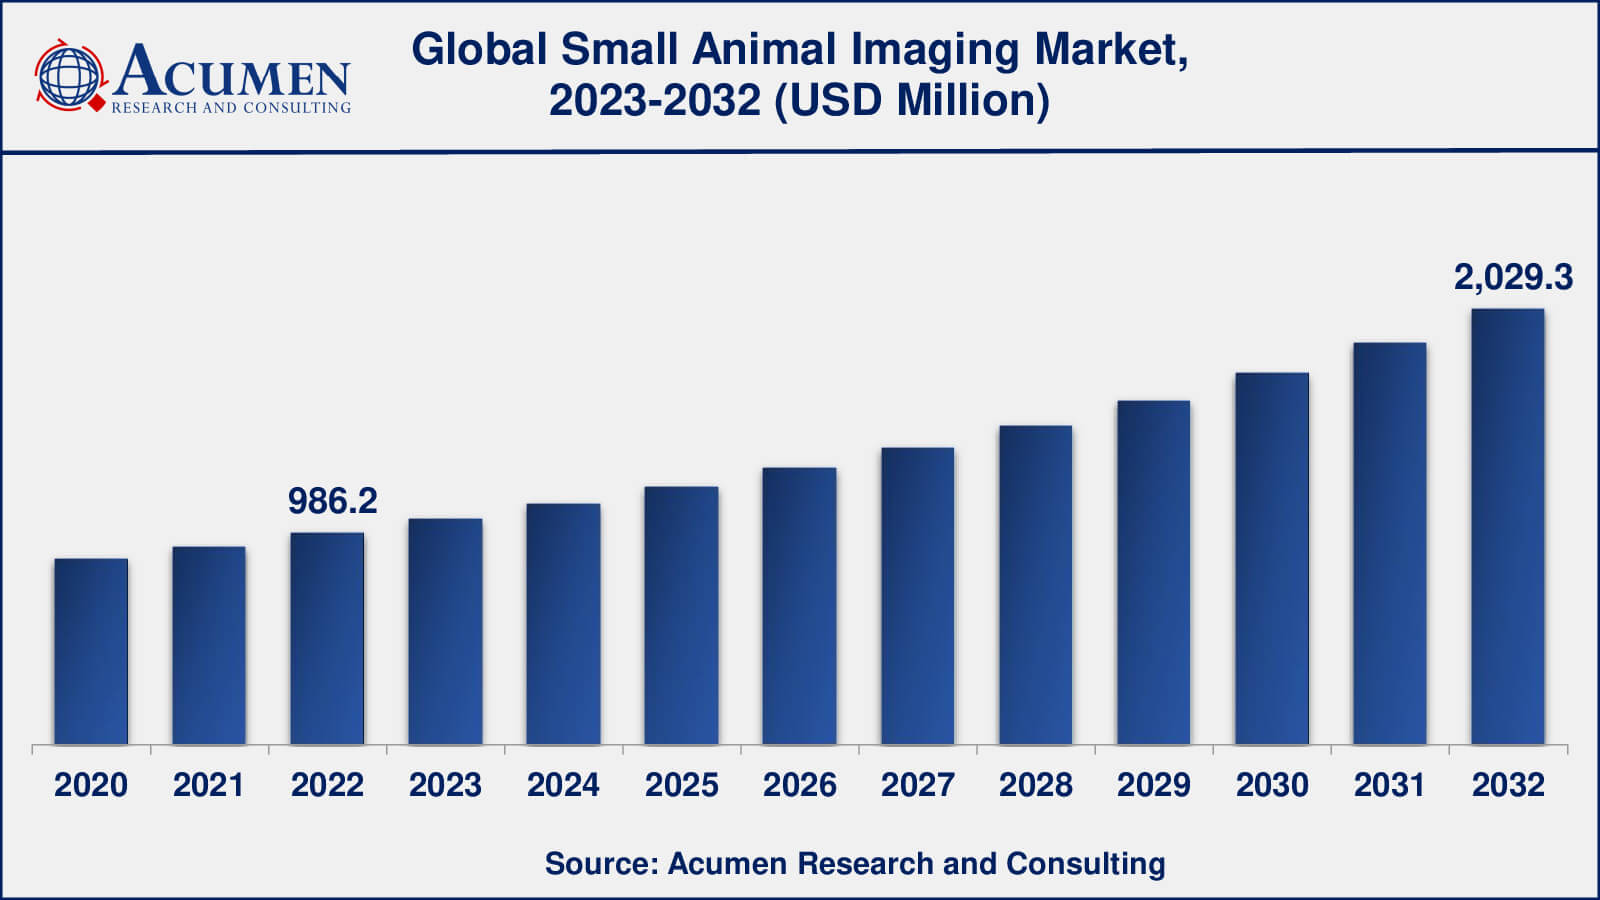 Small Animal Imaging Market Analysis Period